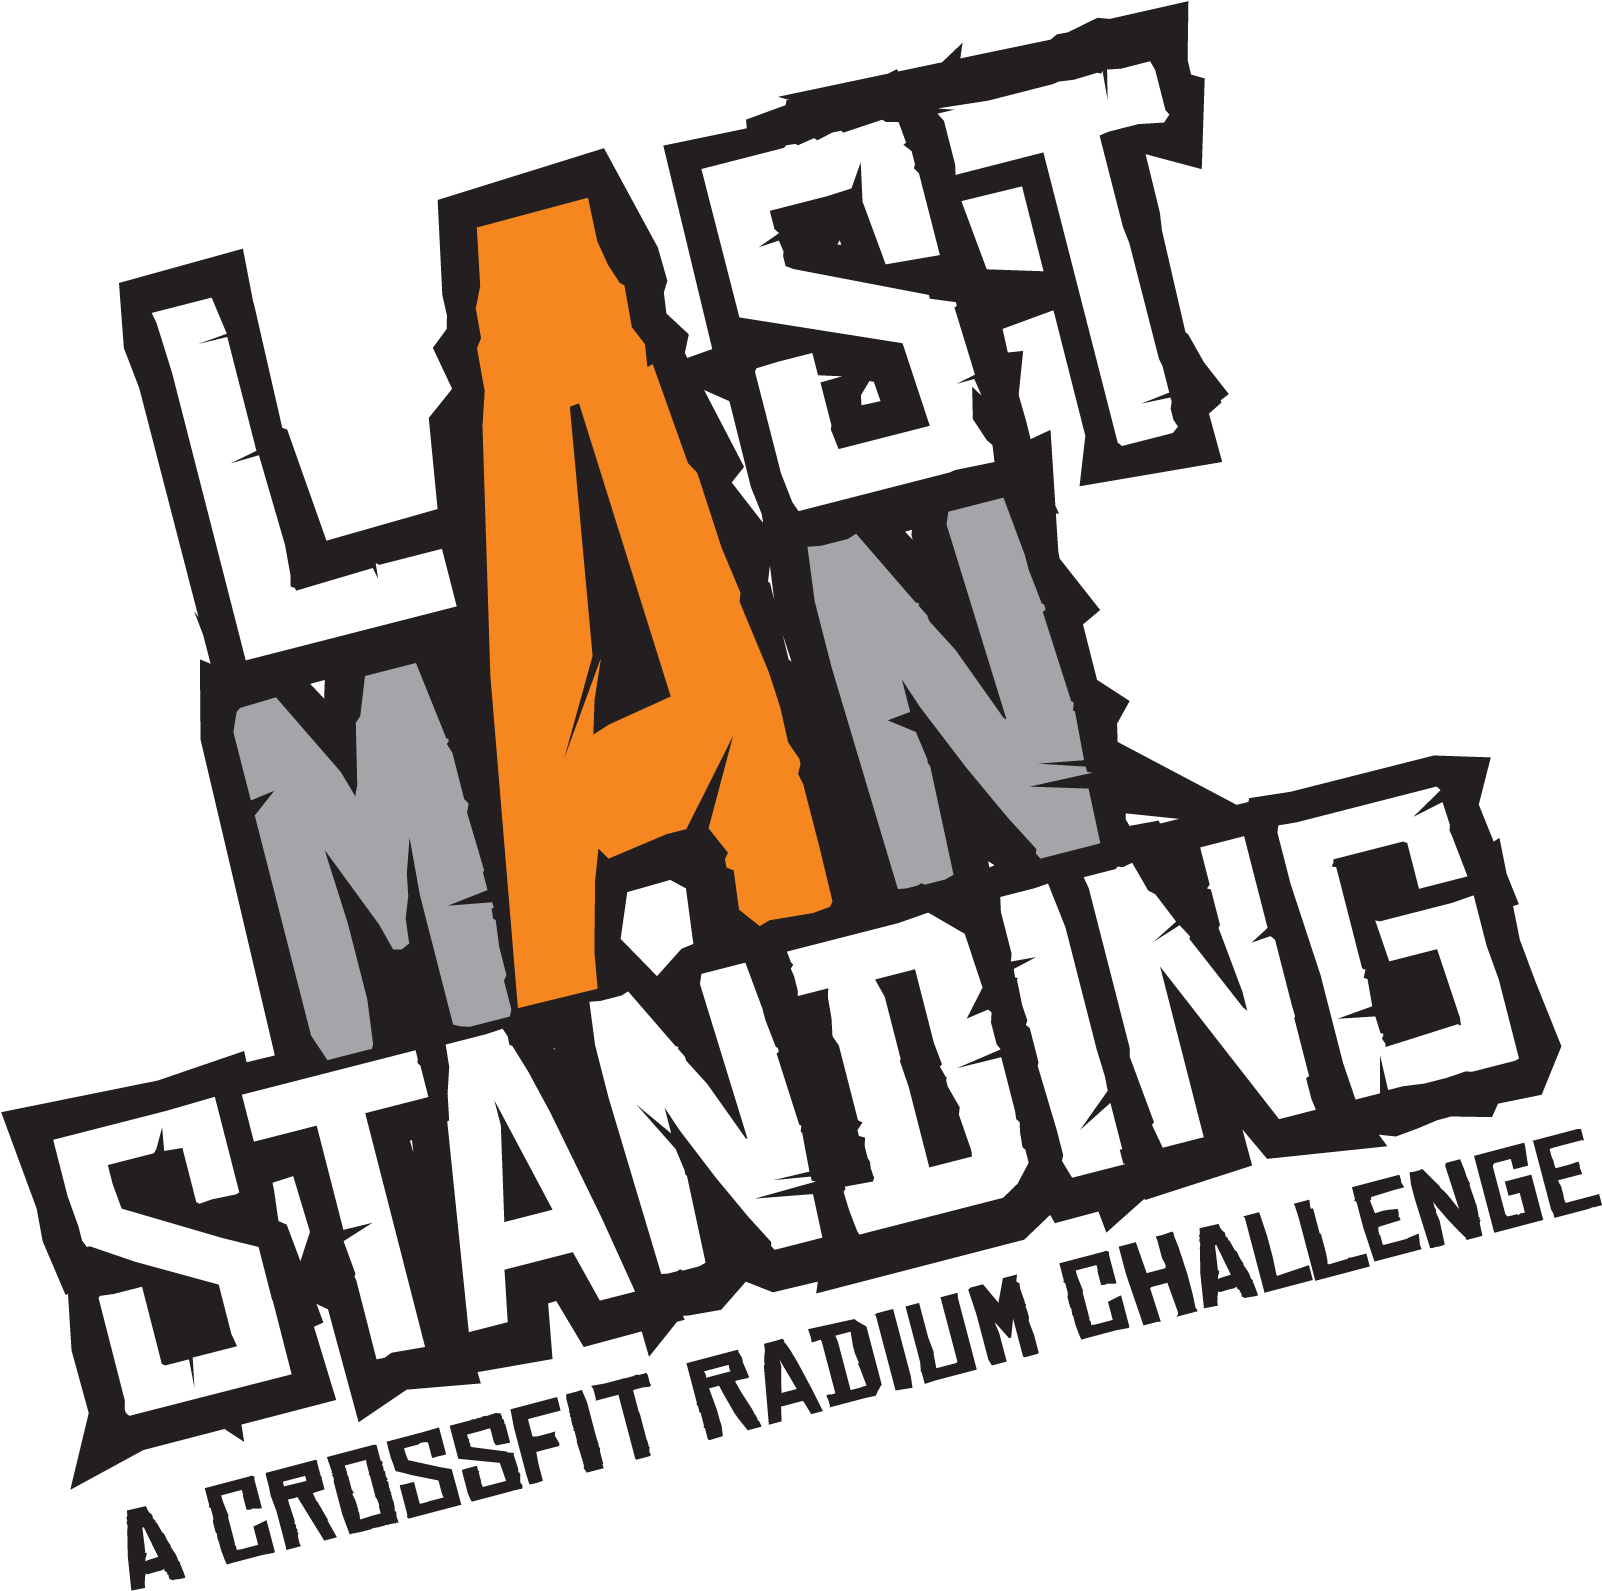 Last man standing. ФОНК last man standing. Хобби геймс логотип. Last man standing от Livingston.